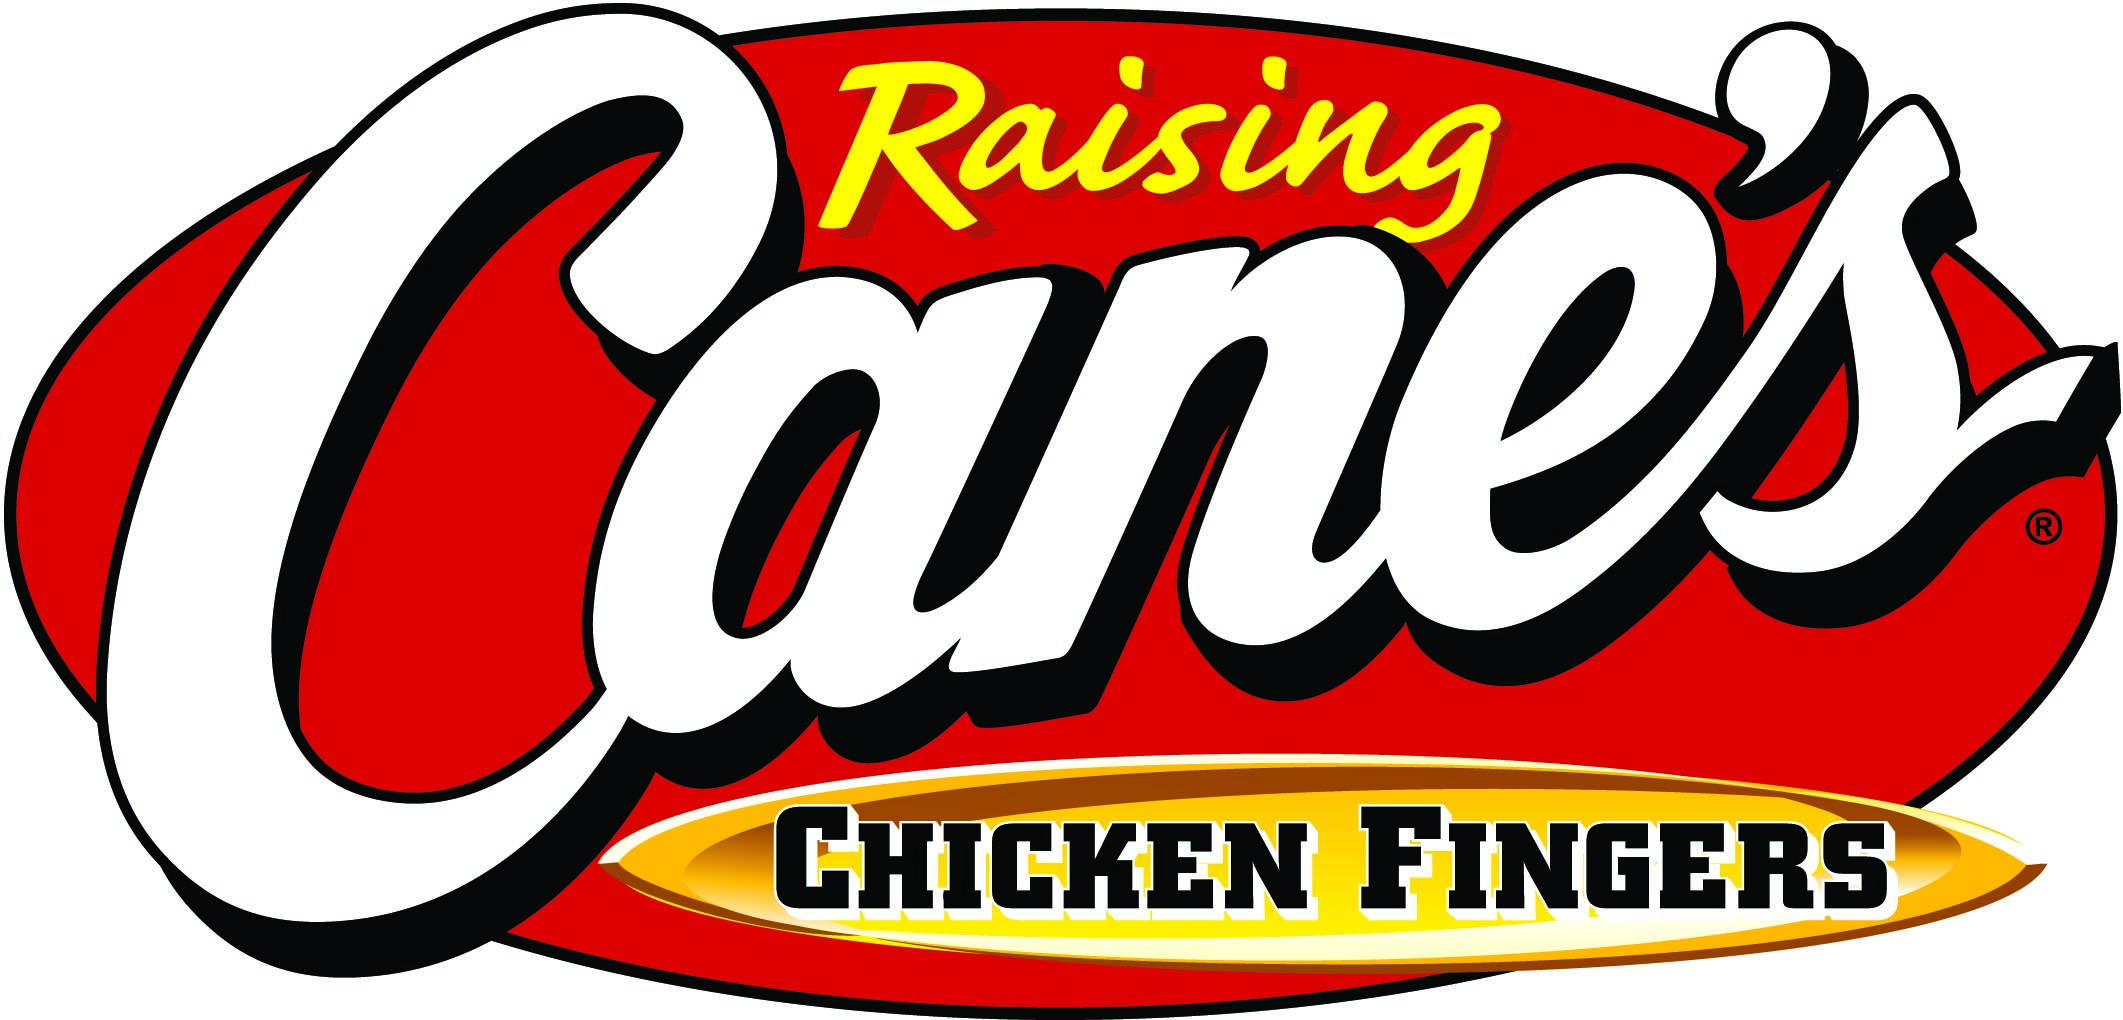 Raising Canes's Chicken Fingers